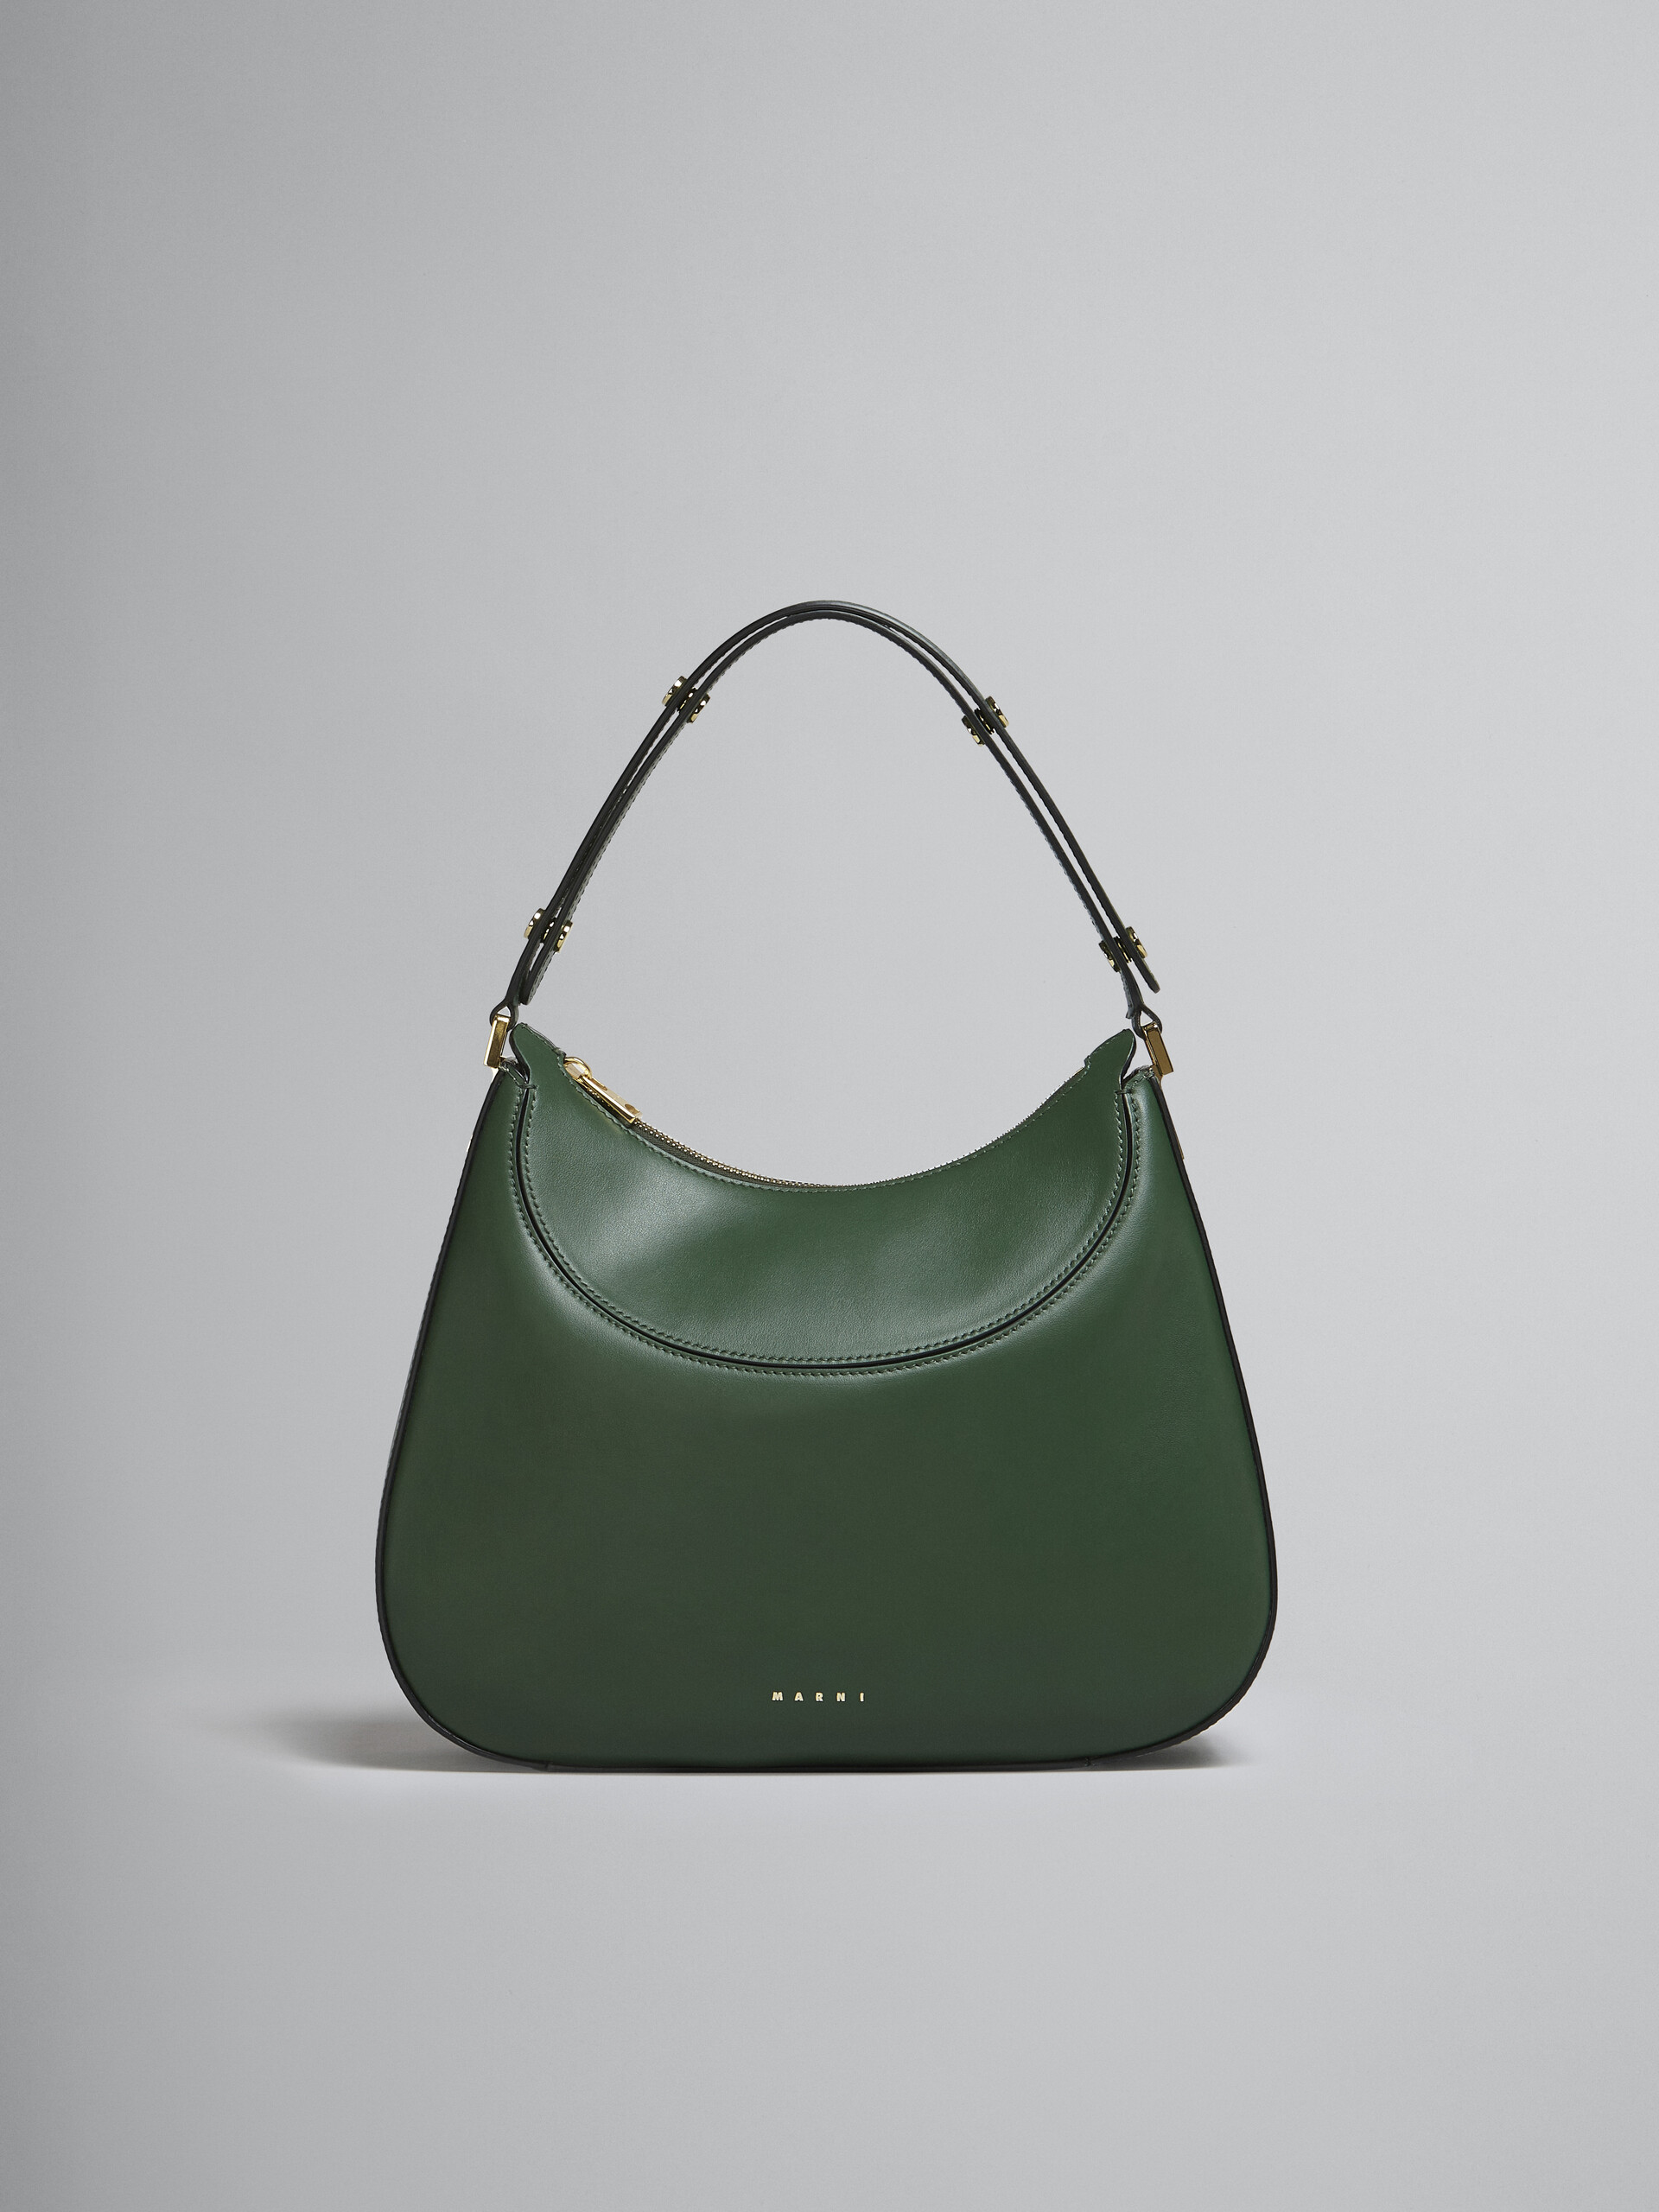 Milano large bag in green leather - Handbag - Image 1